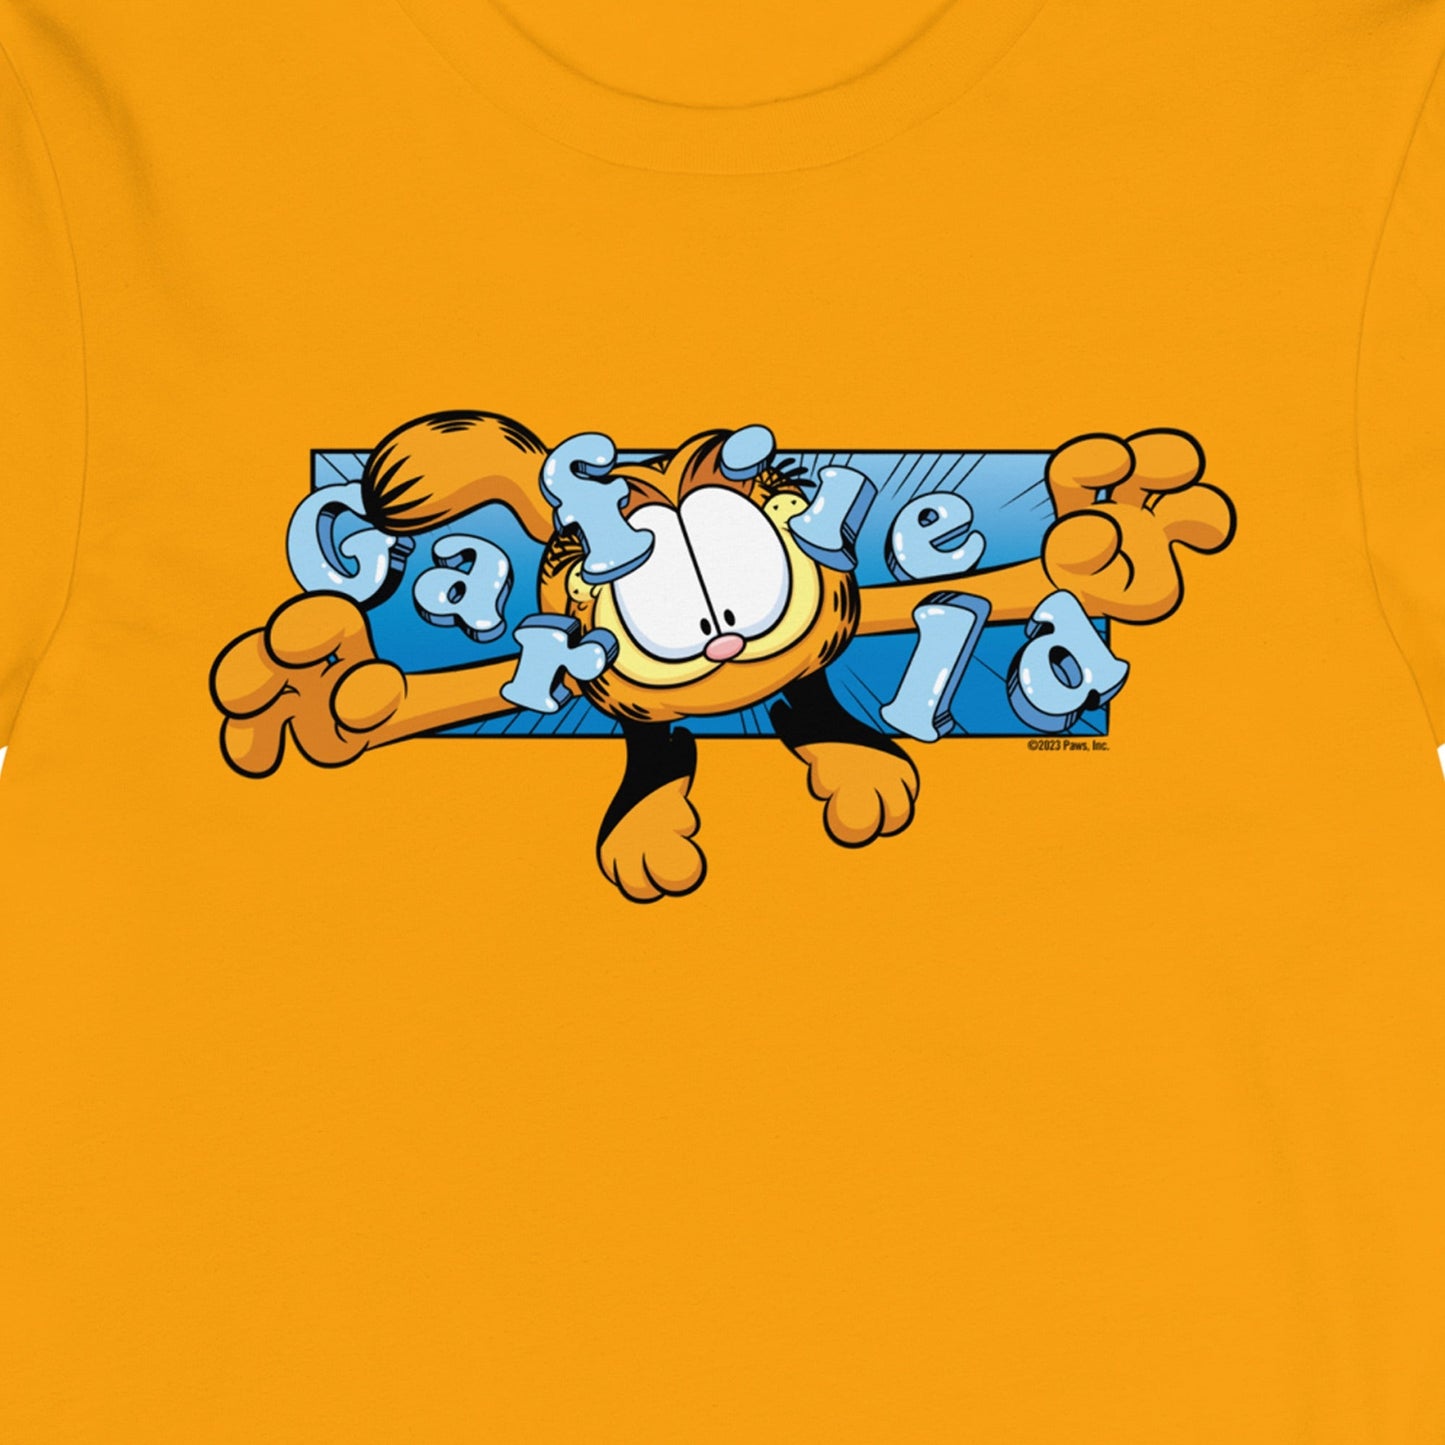 Garfield Flying Garfield Adult Long Sleeve T - Shirt - Paramount Shop